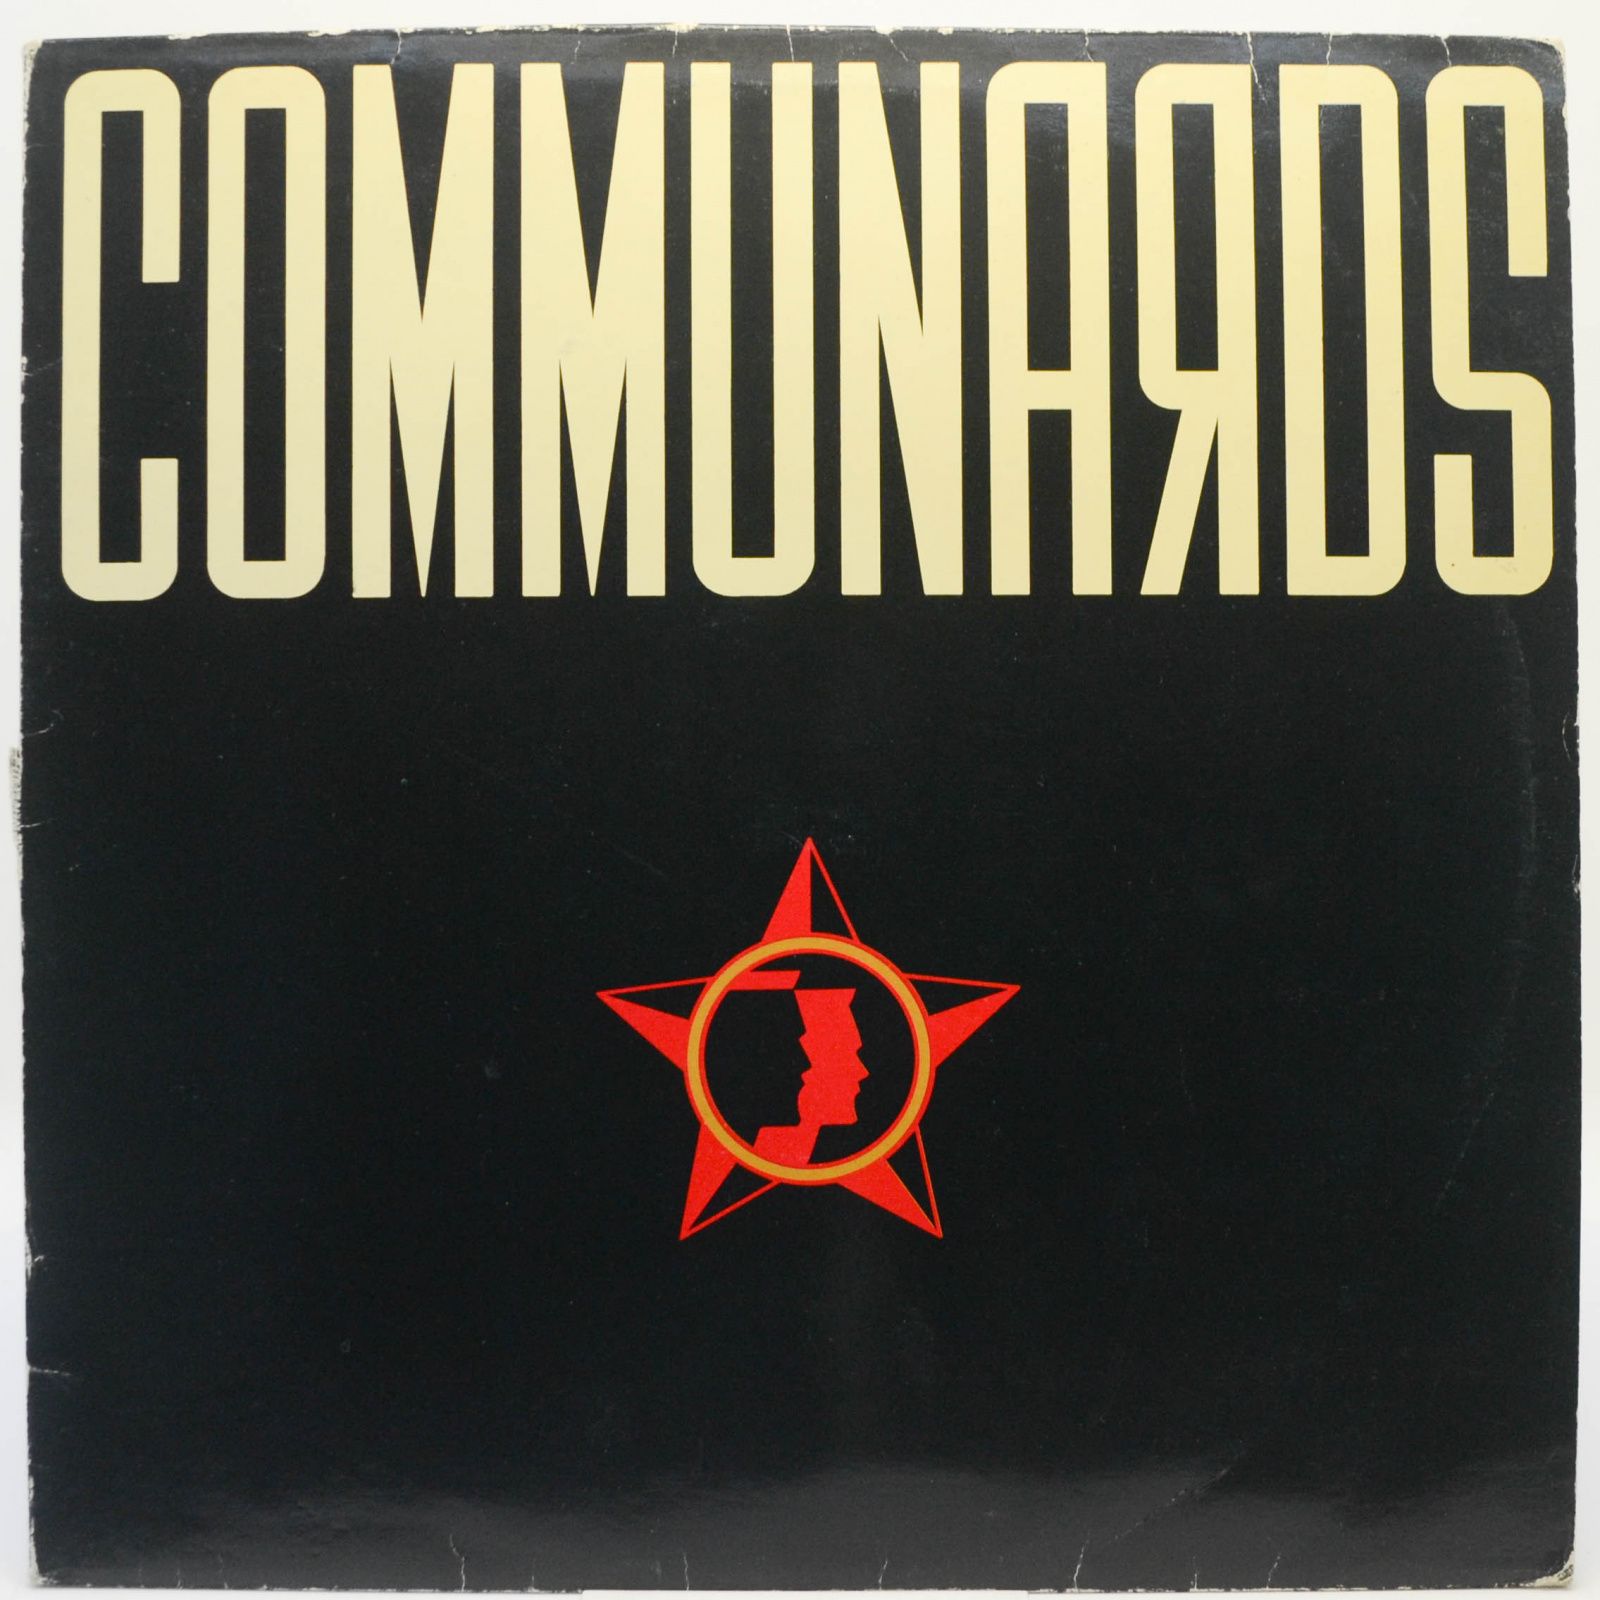 Communards — Communards, 1986